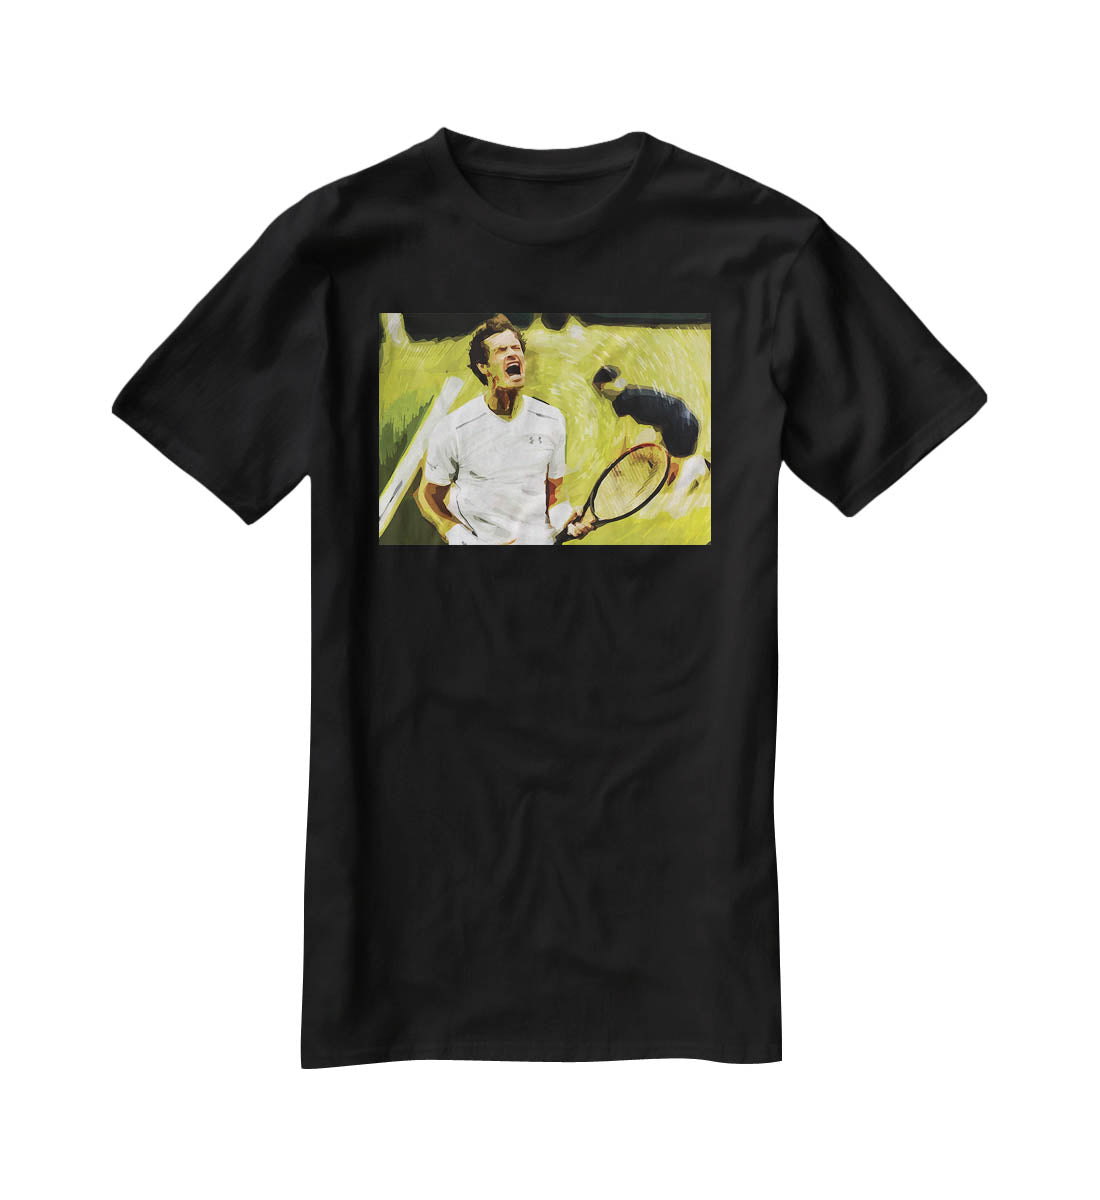 Andy Murray Wimbledon T-Shirt